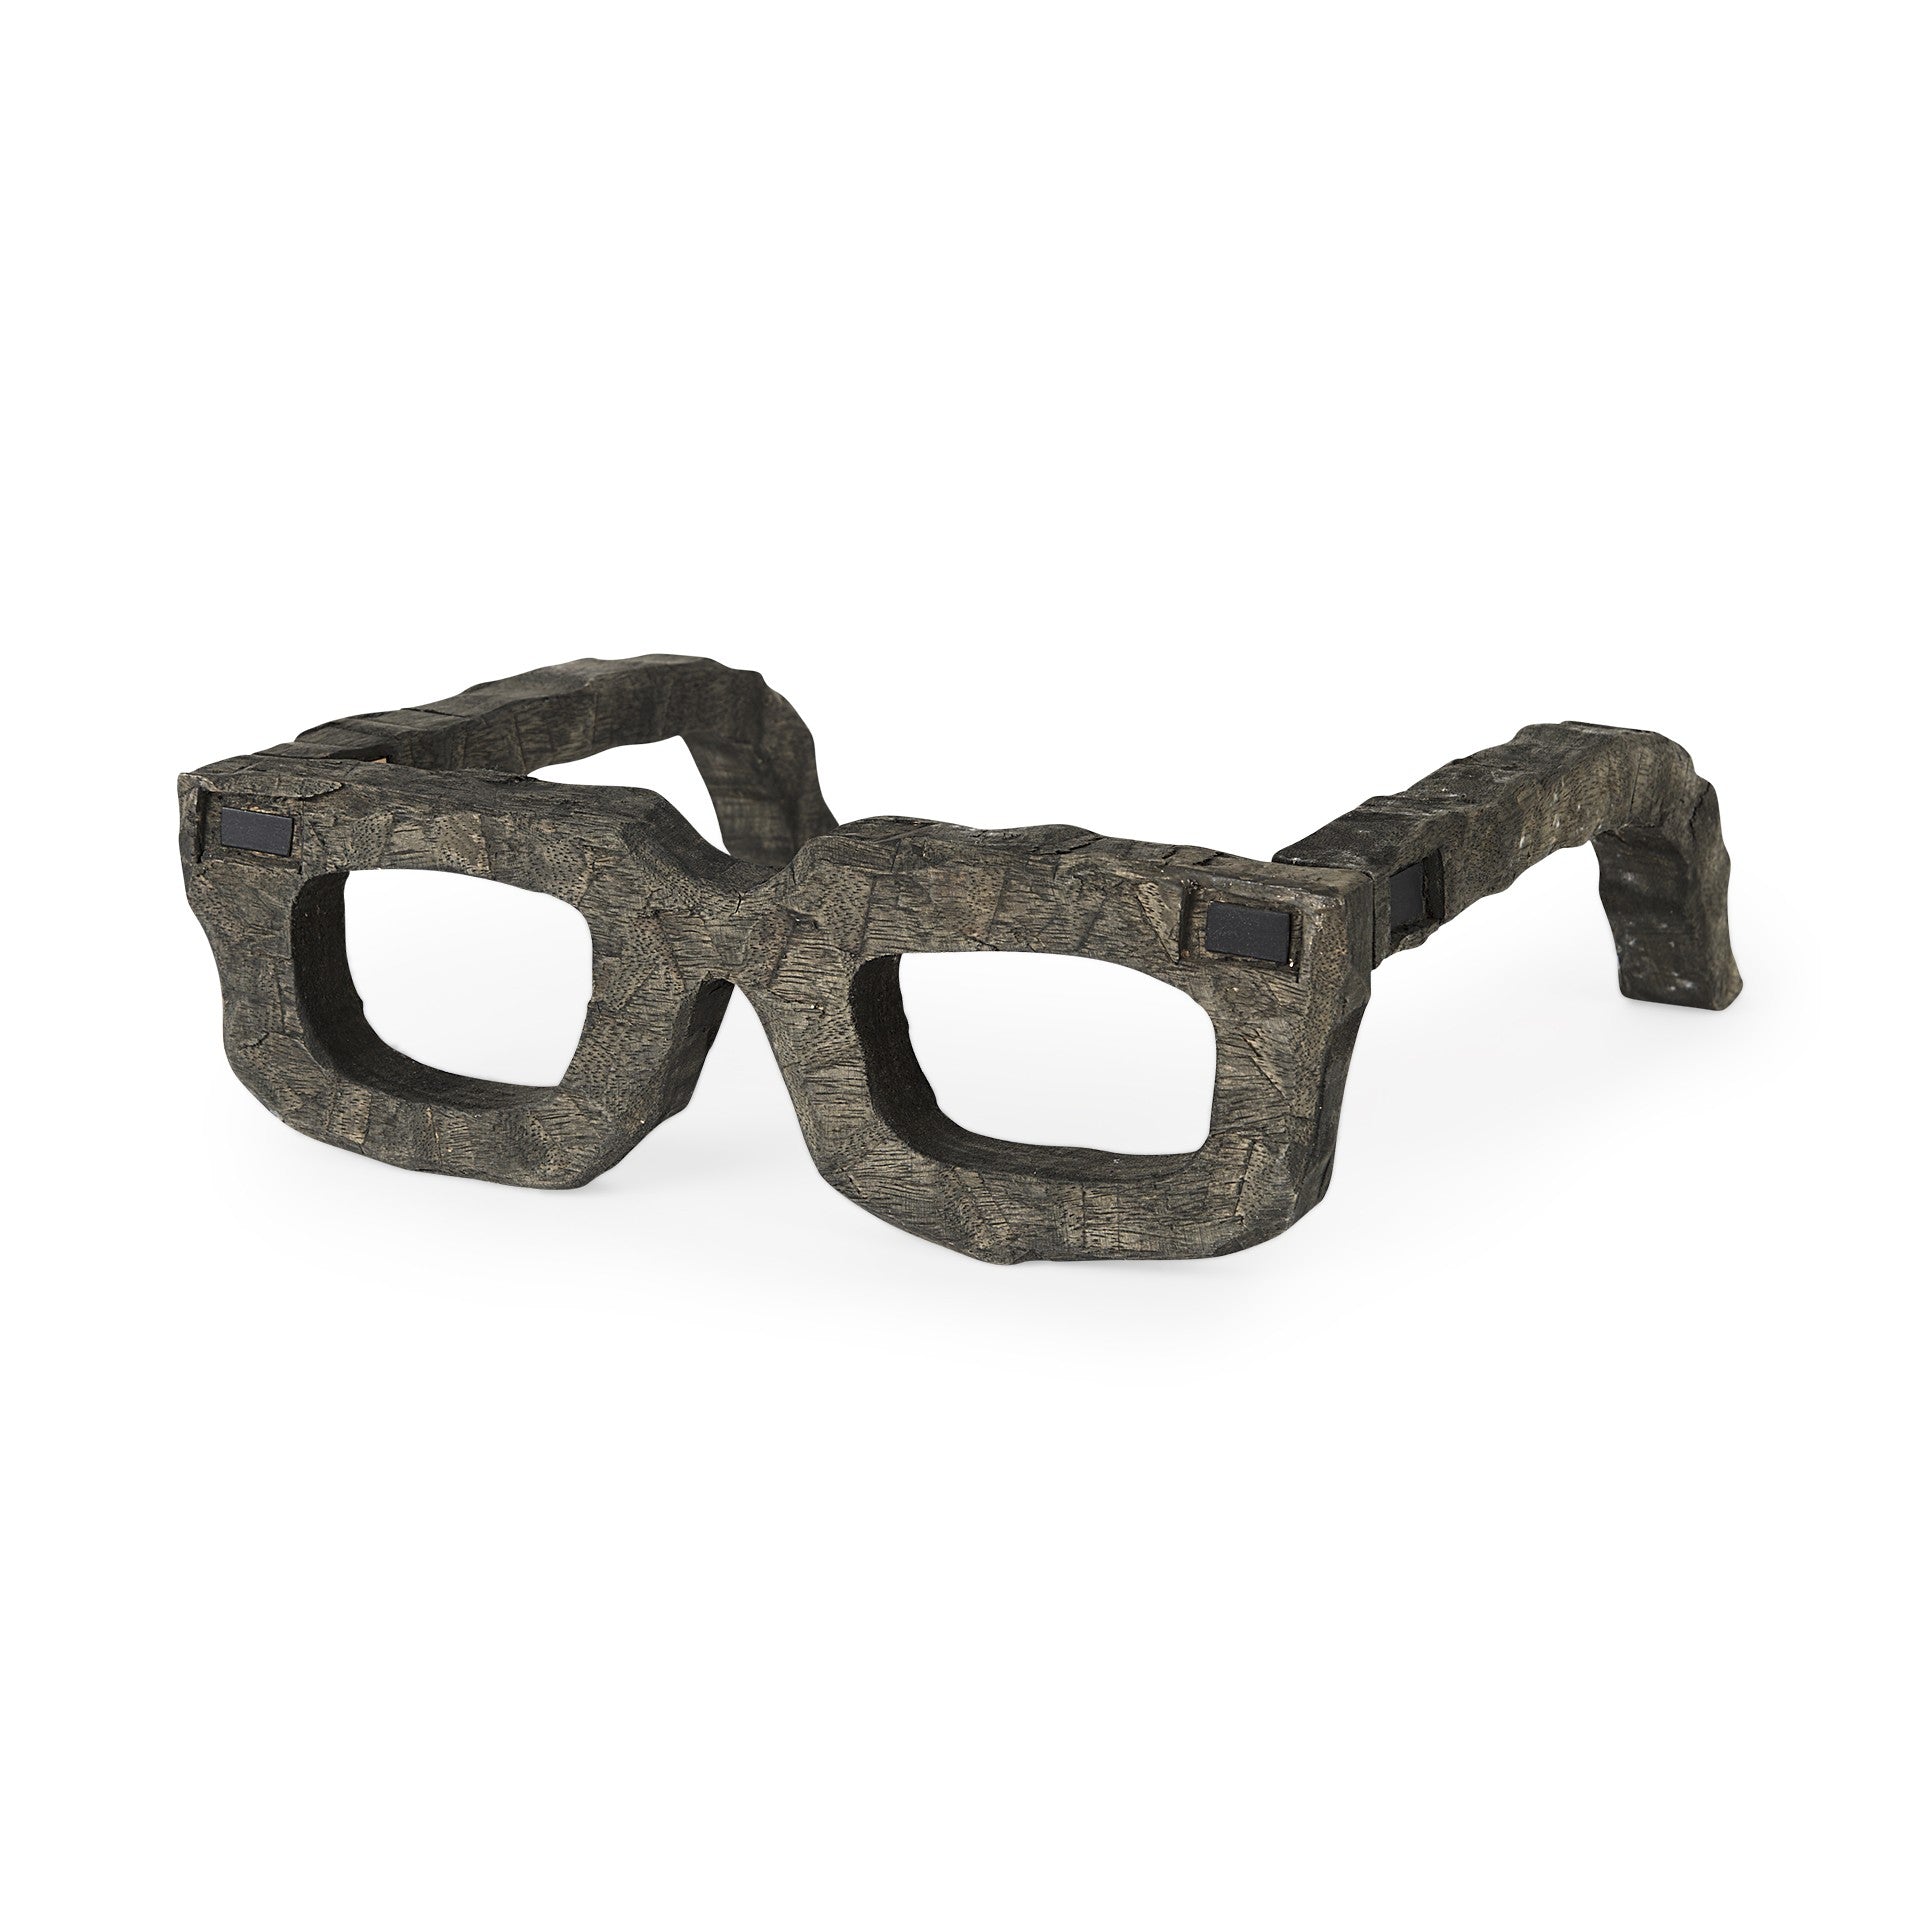 Eugene Rustic Brown Wooden Eyeglass Sculpture